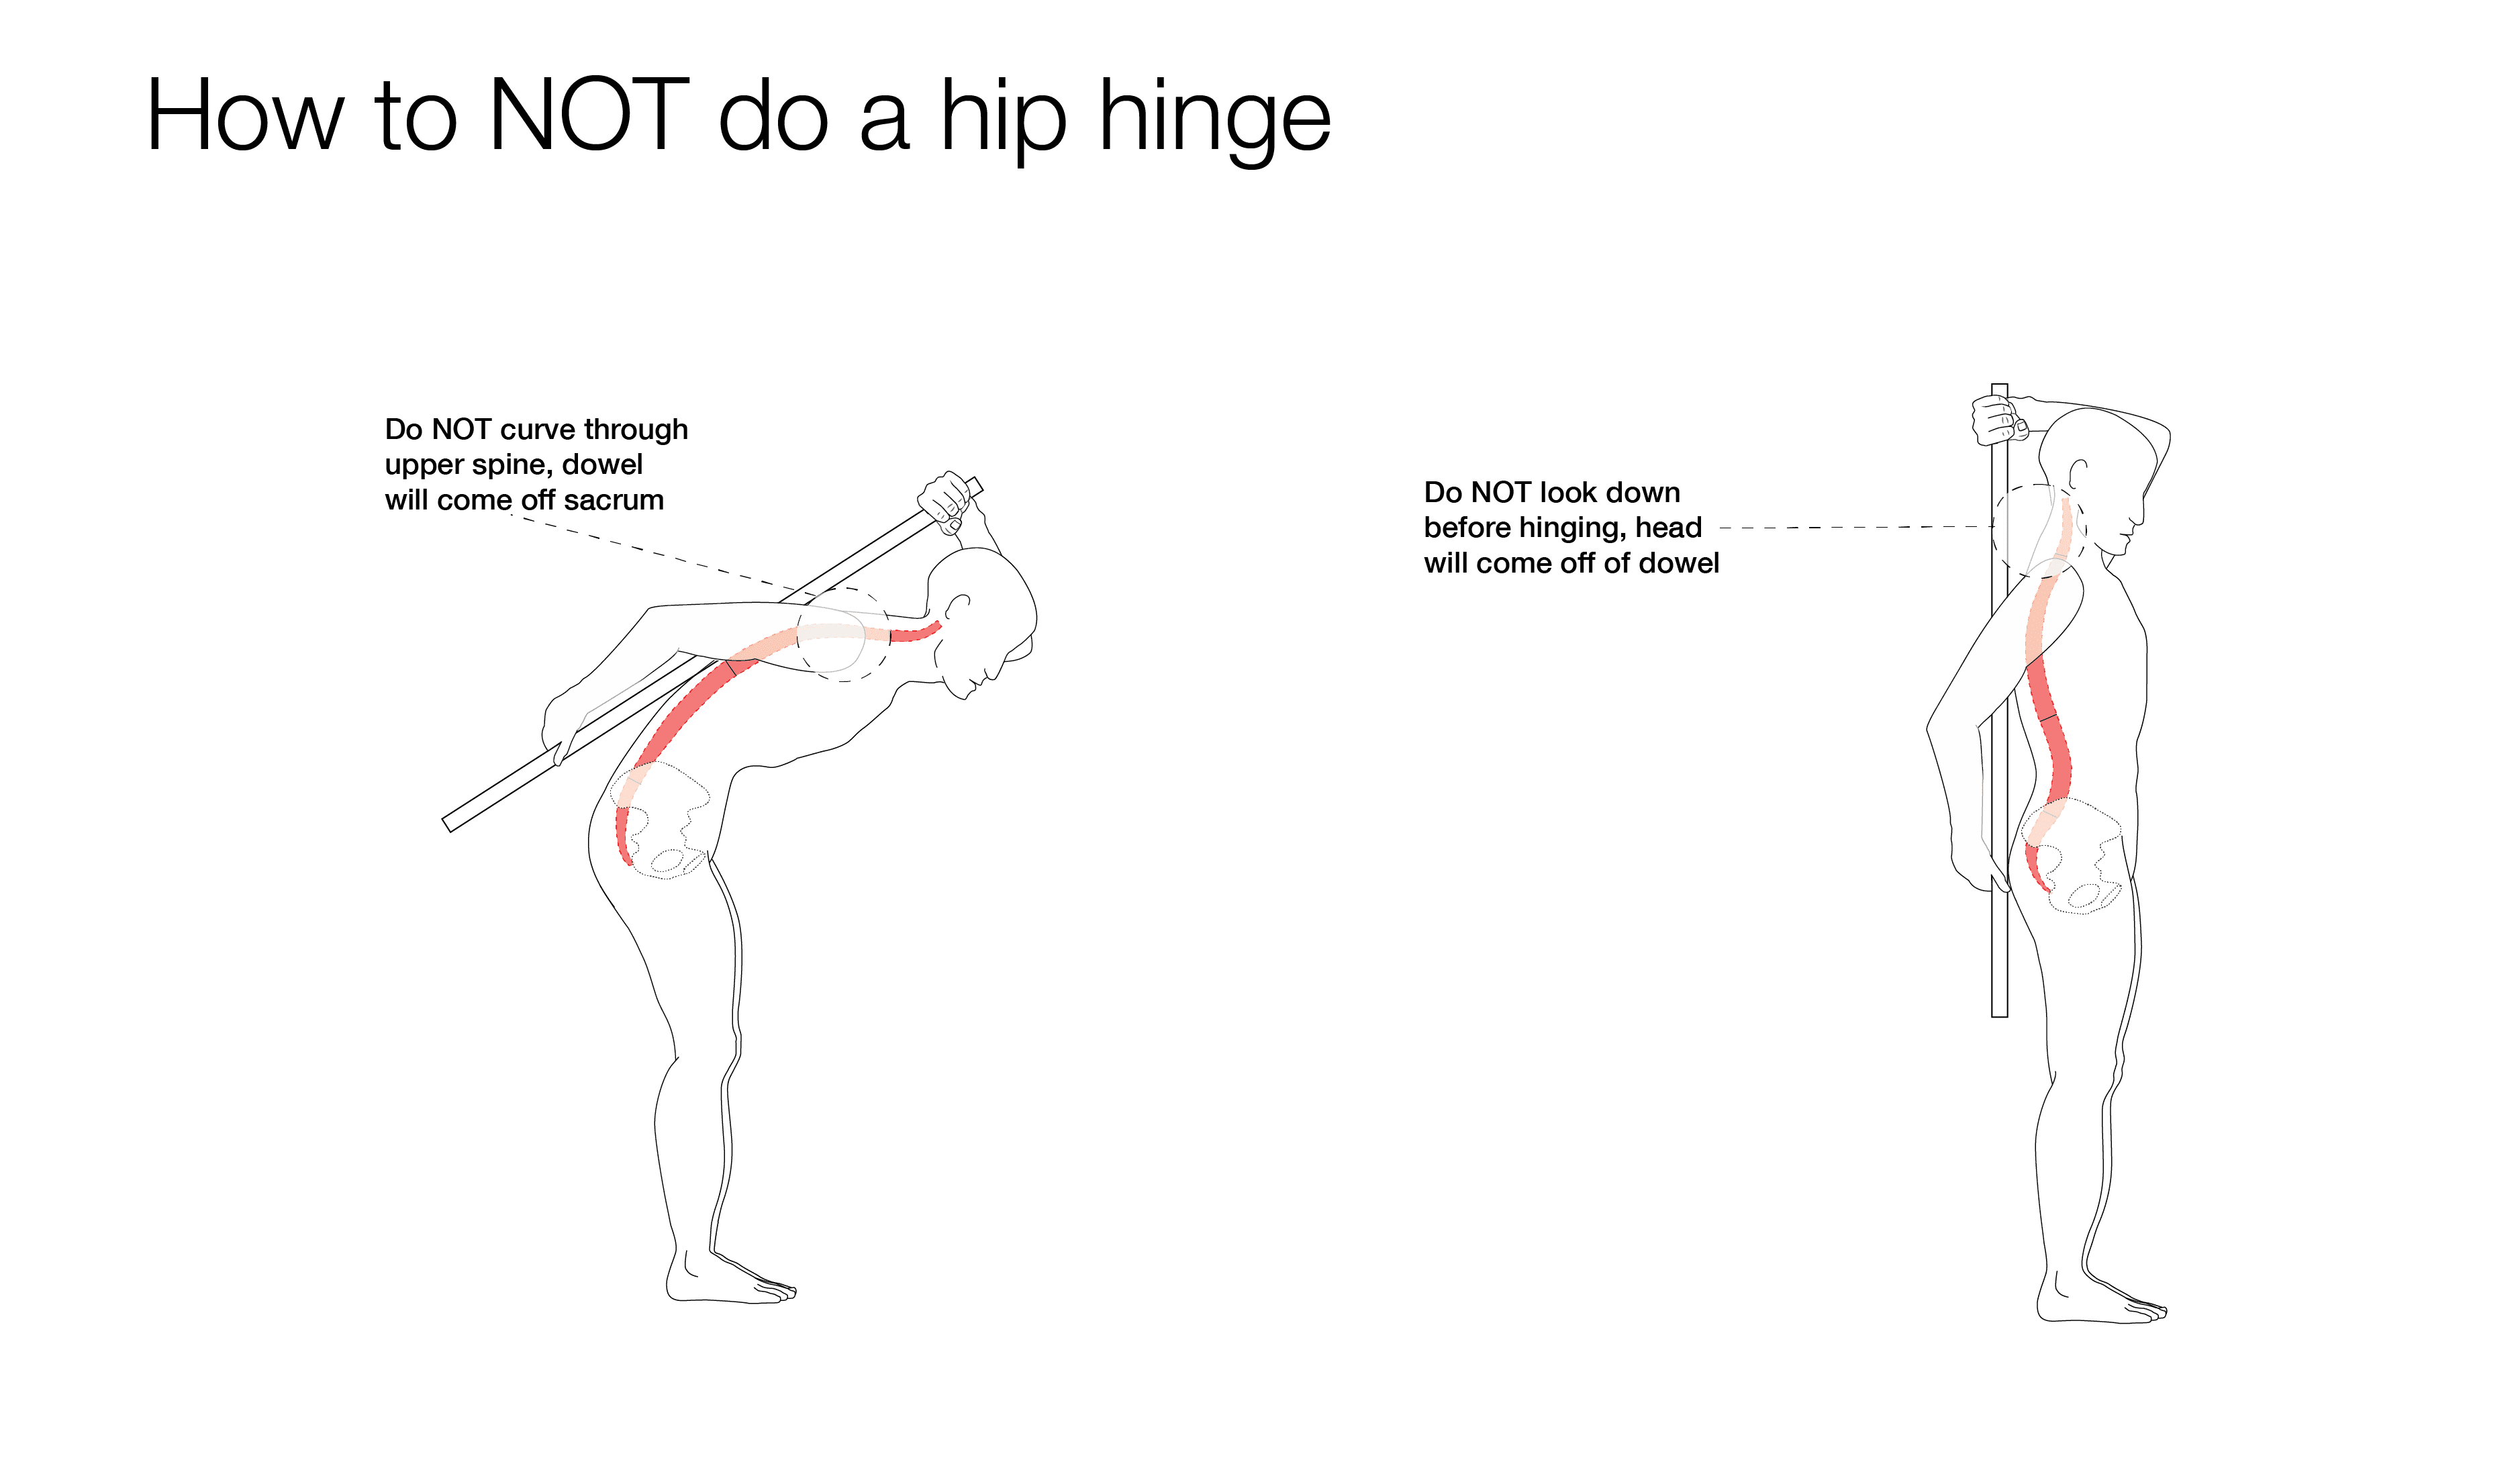 How to do not a hip hinge_Artboard 9